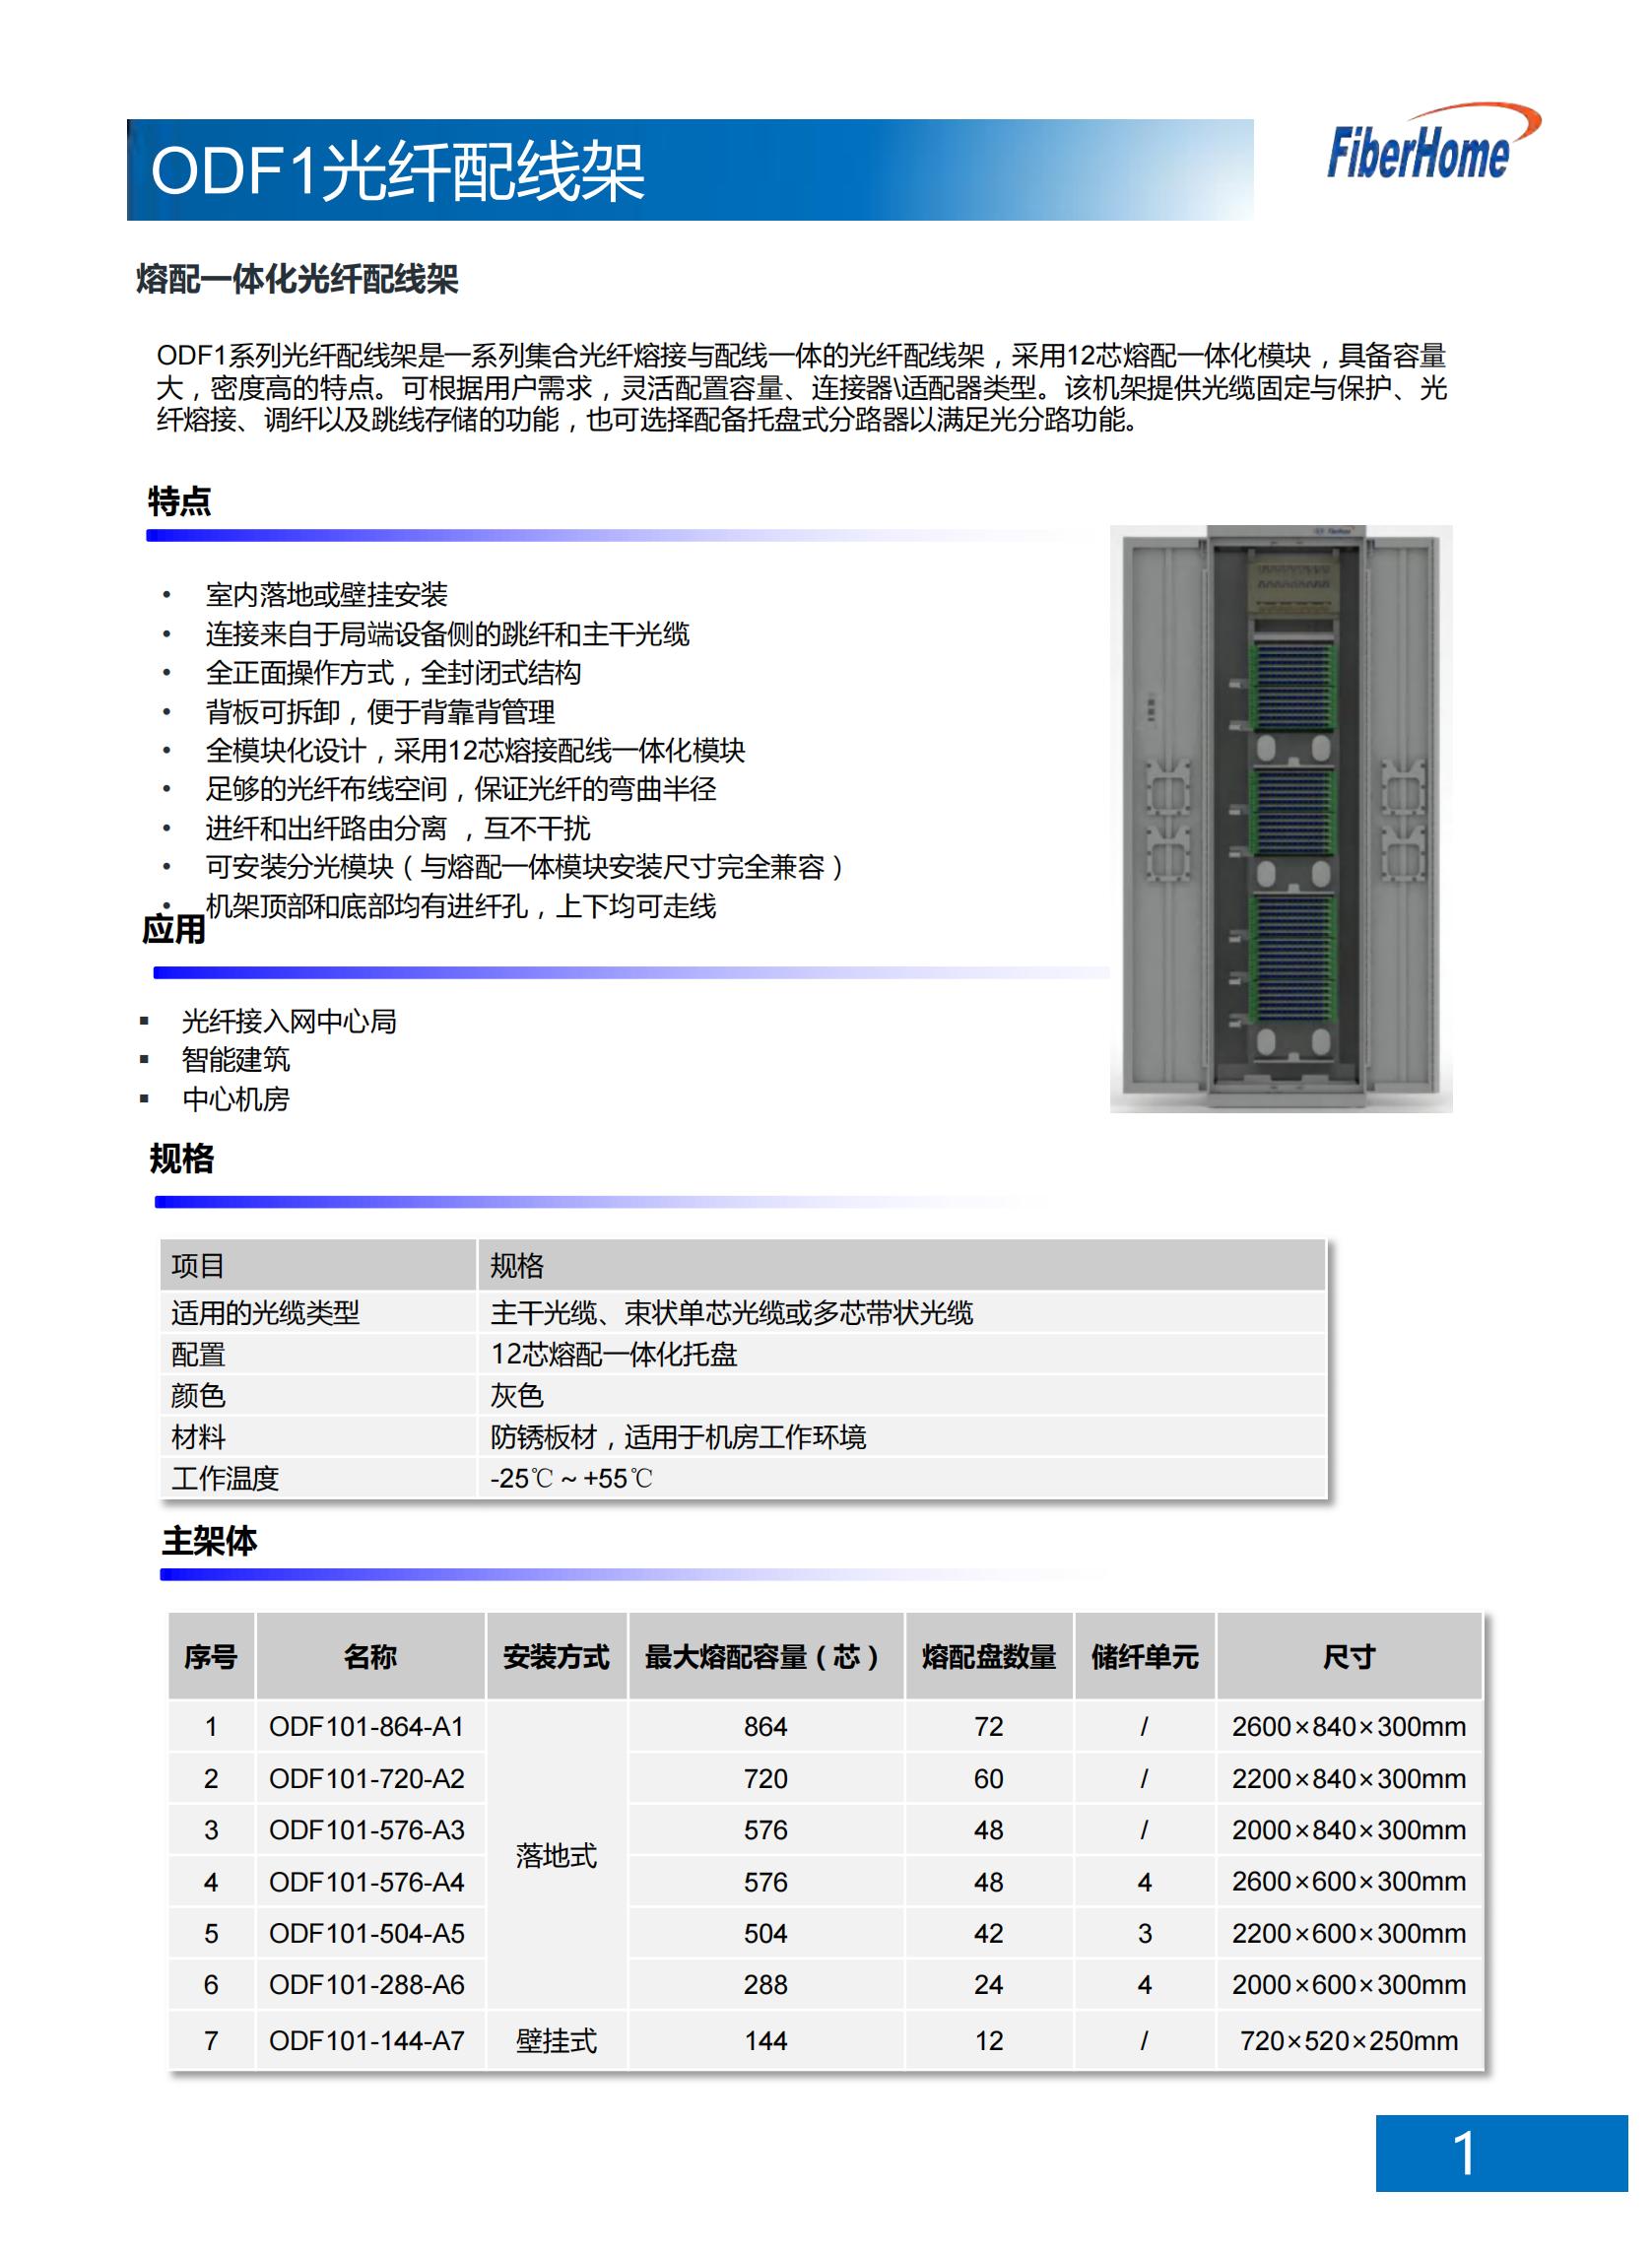 ODF101-288-A6-FC ODF optical fiber distribution frame (288-core floor-standing all include 12-core FC fusion integration unit)